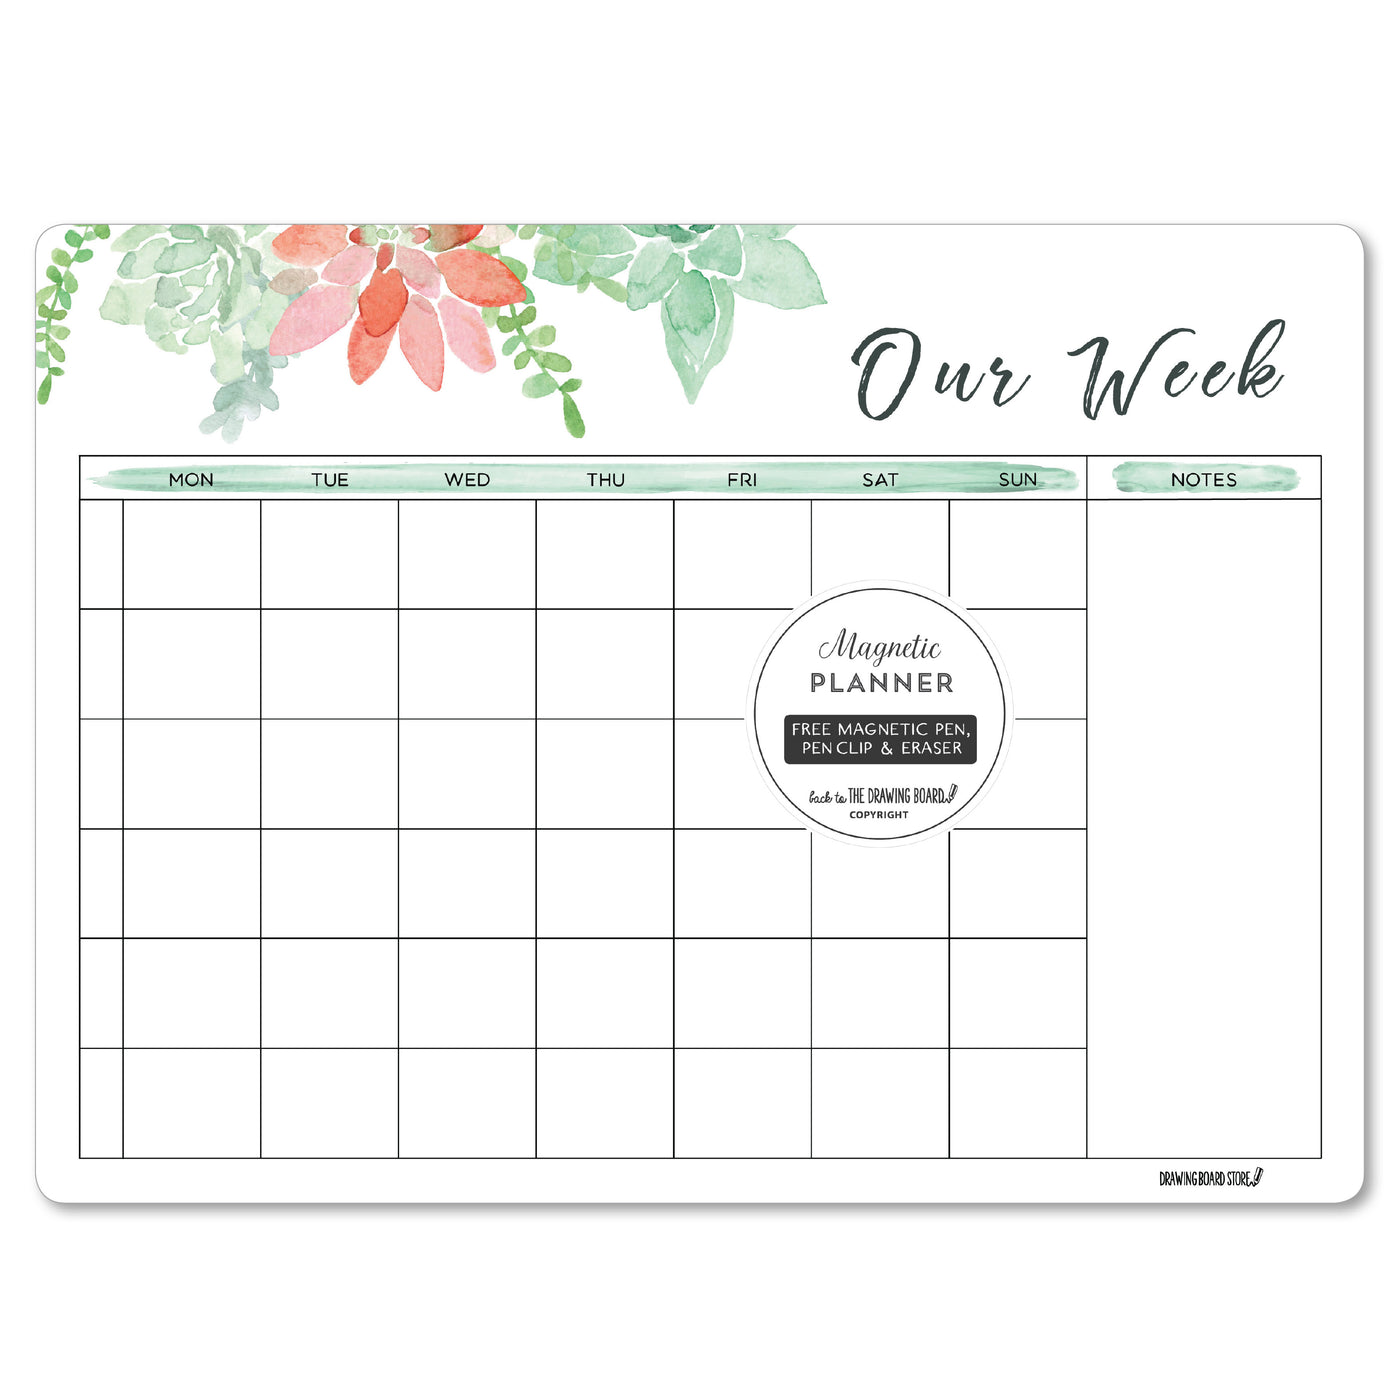 Magnetic whiteboard dry erase fridge planner calendar our family week |Drawingboardstore